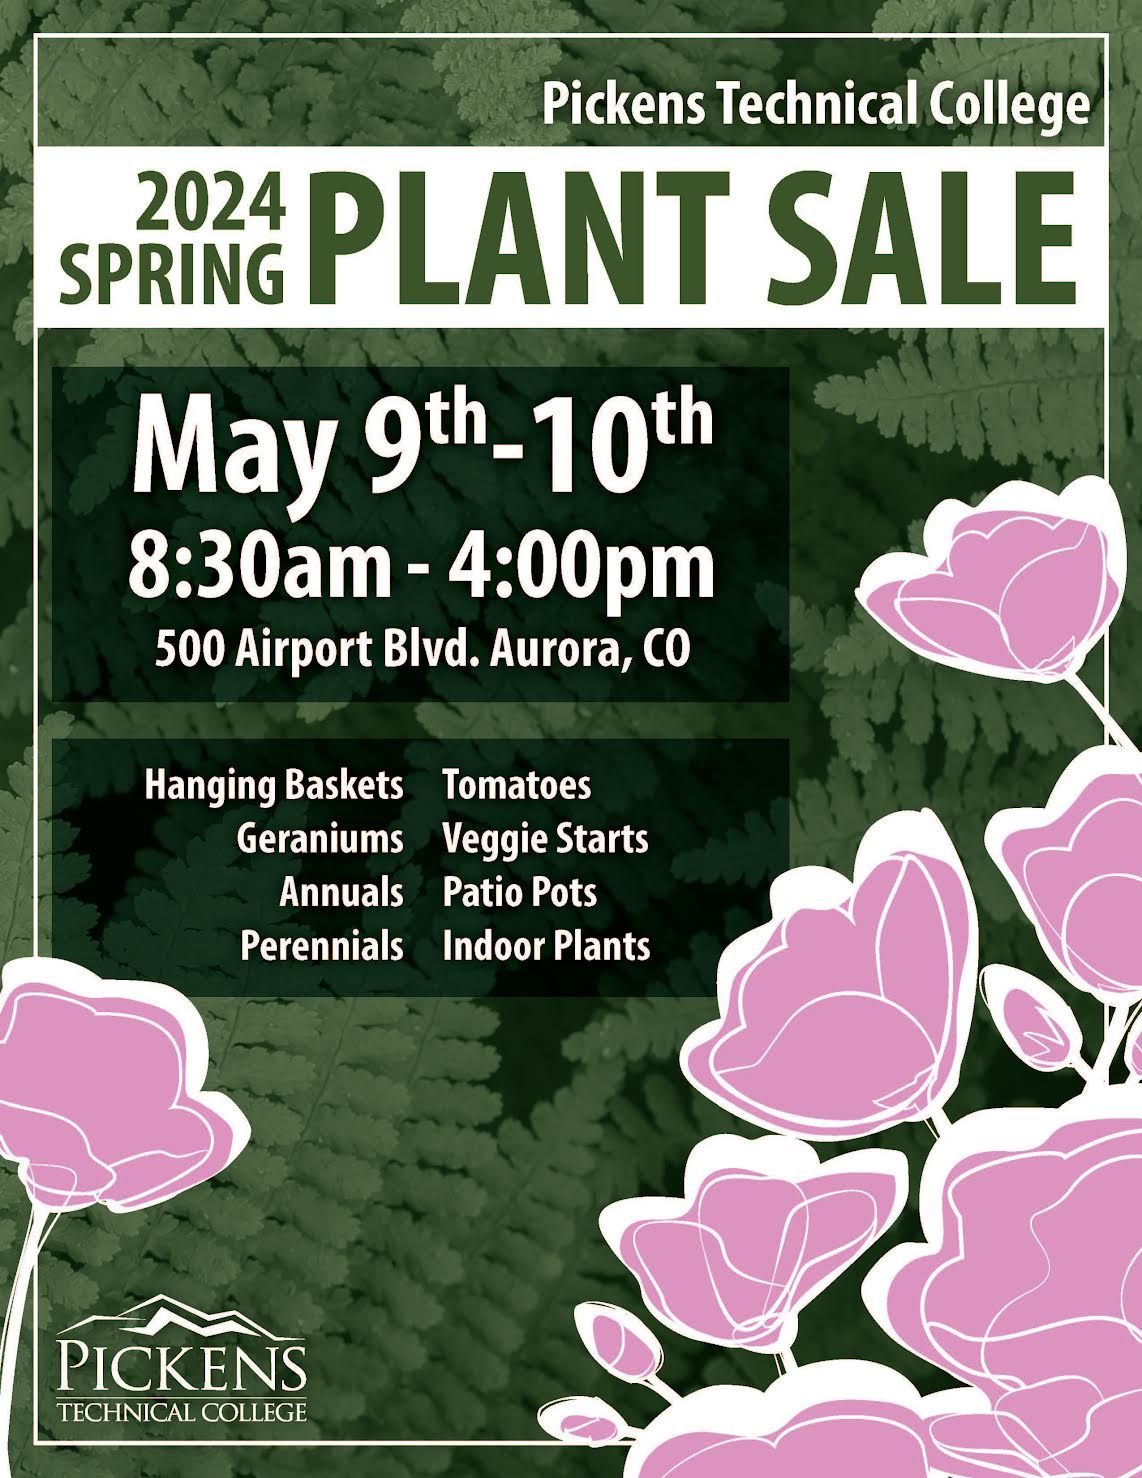 Spring Plant Sale